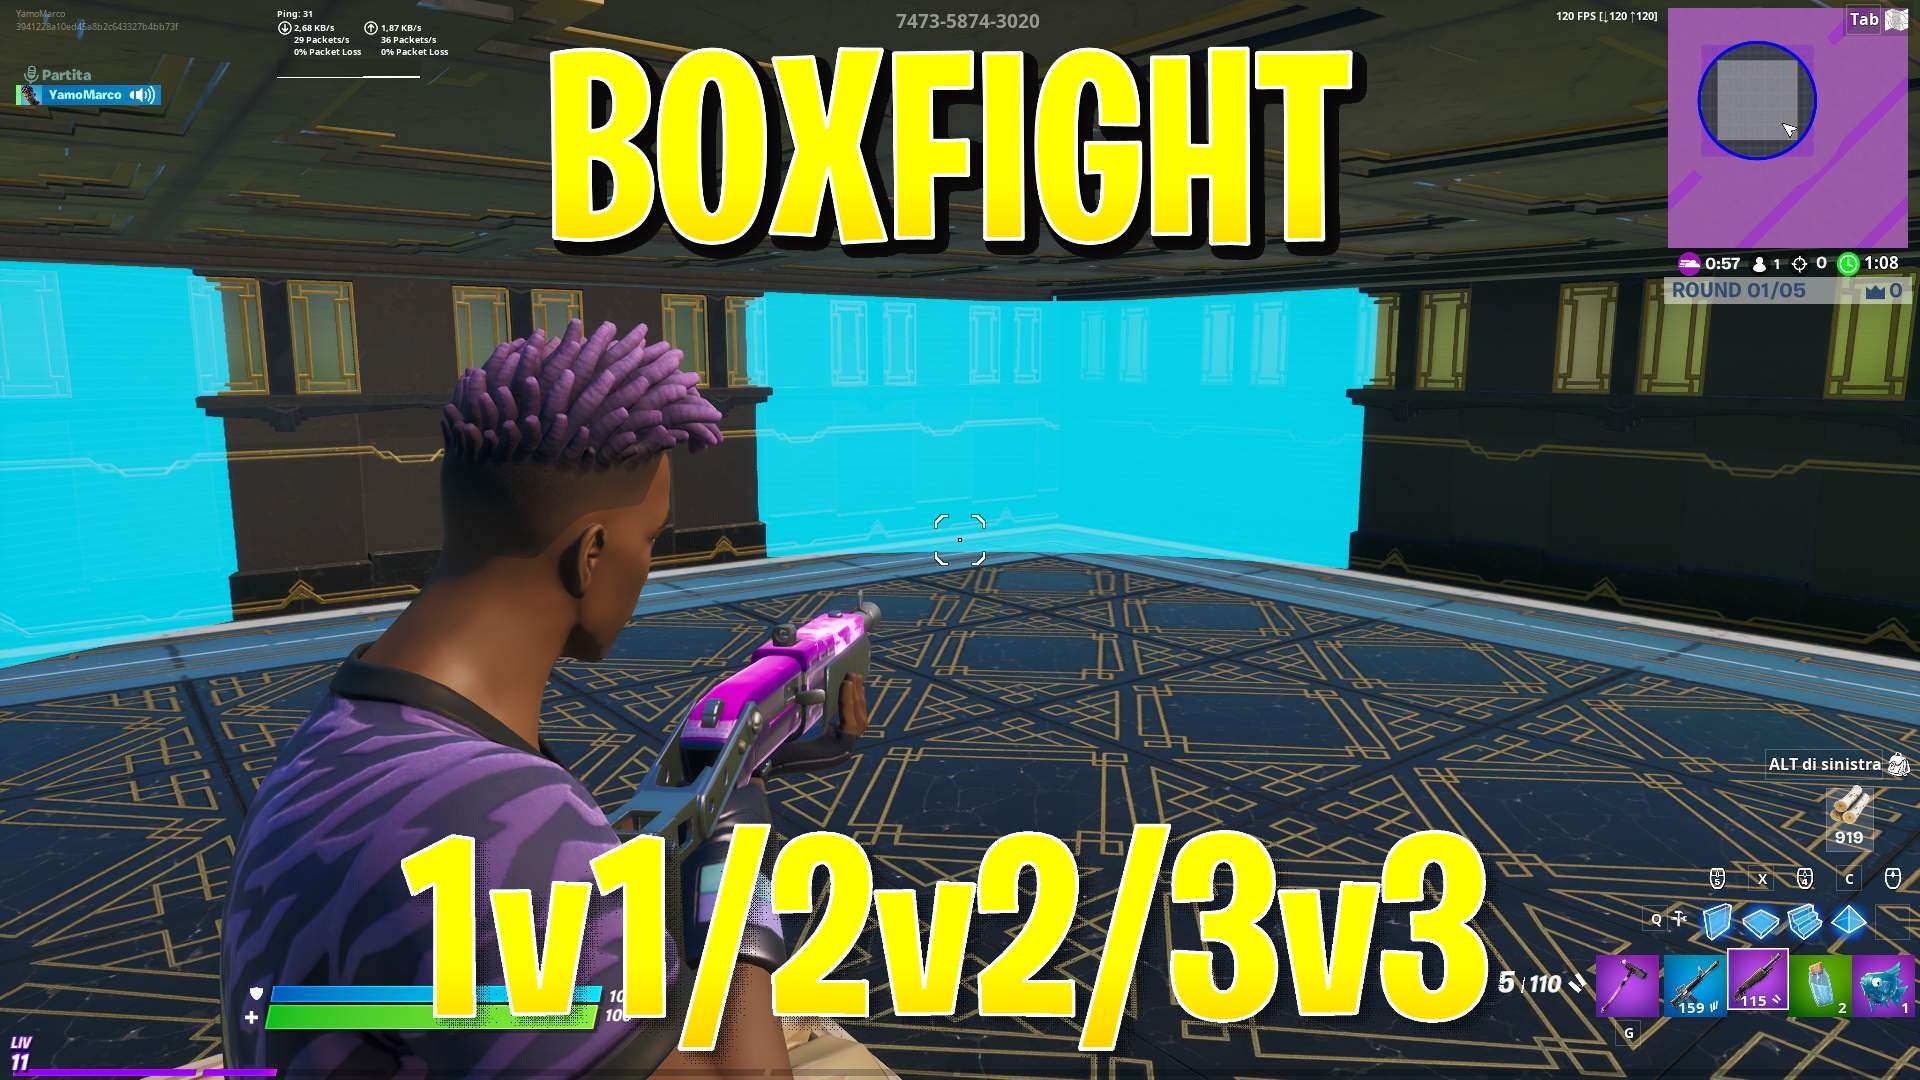 Creative Box Fight Map Fortnite Bank Boxfight Squads Fortnite Creative Box Fights Map Code